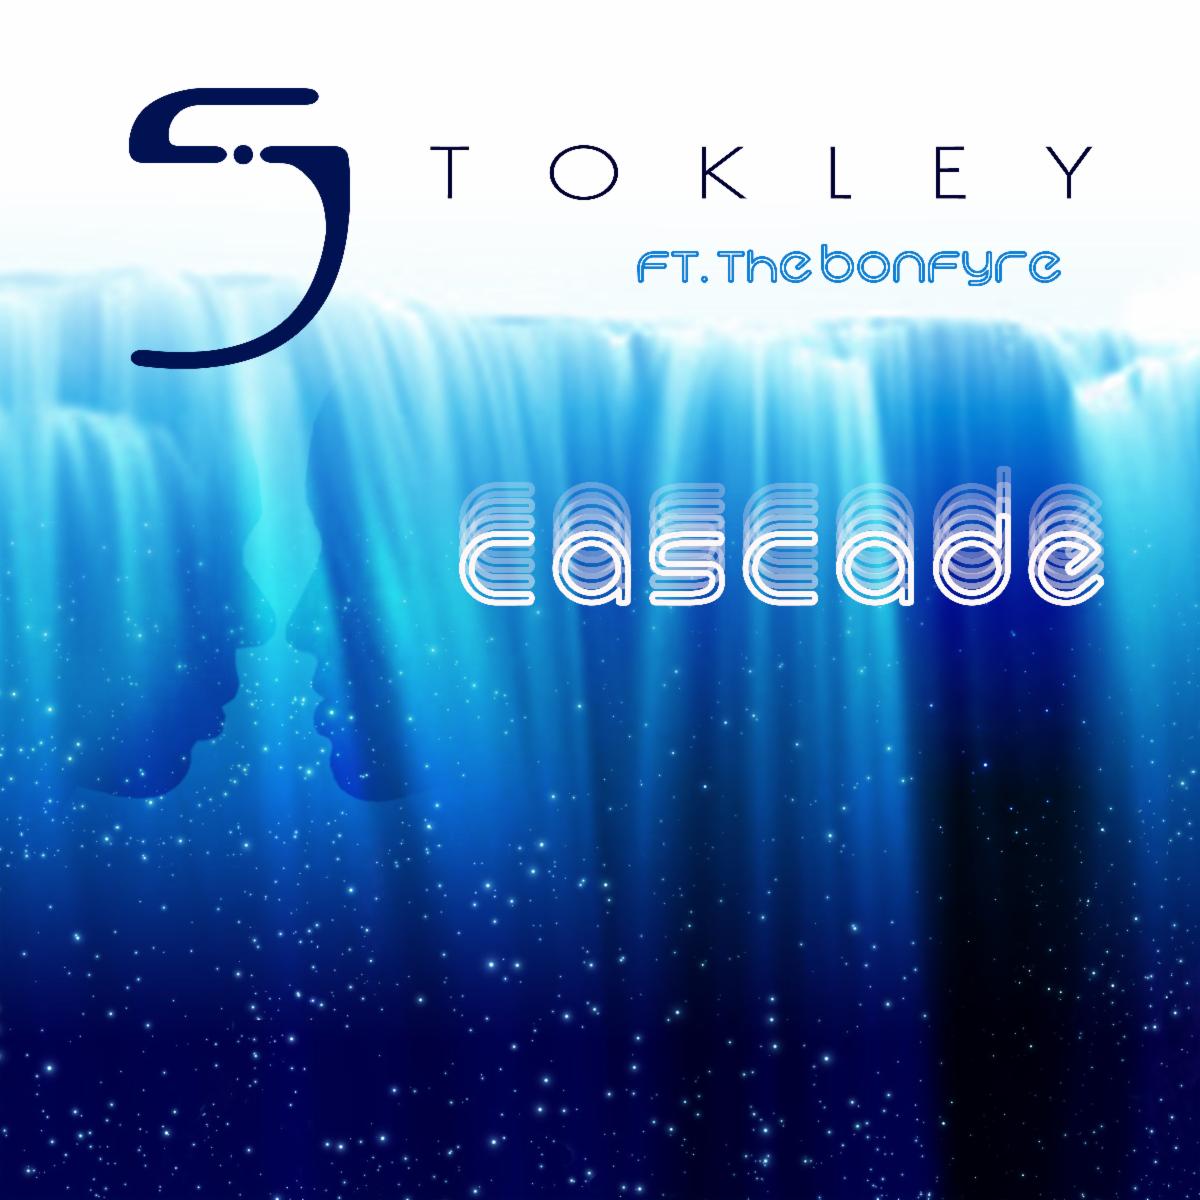 Art for Cascade by Stokley ft. TheBonfyre